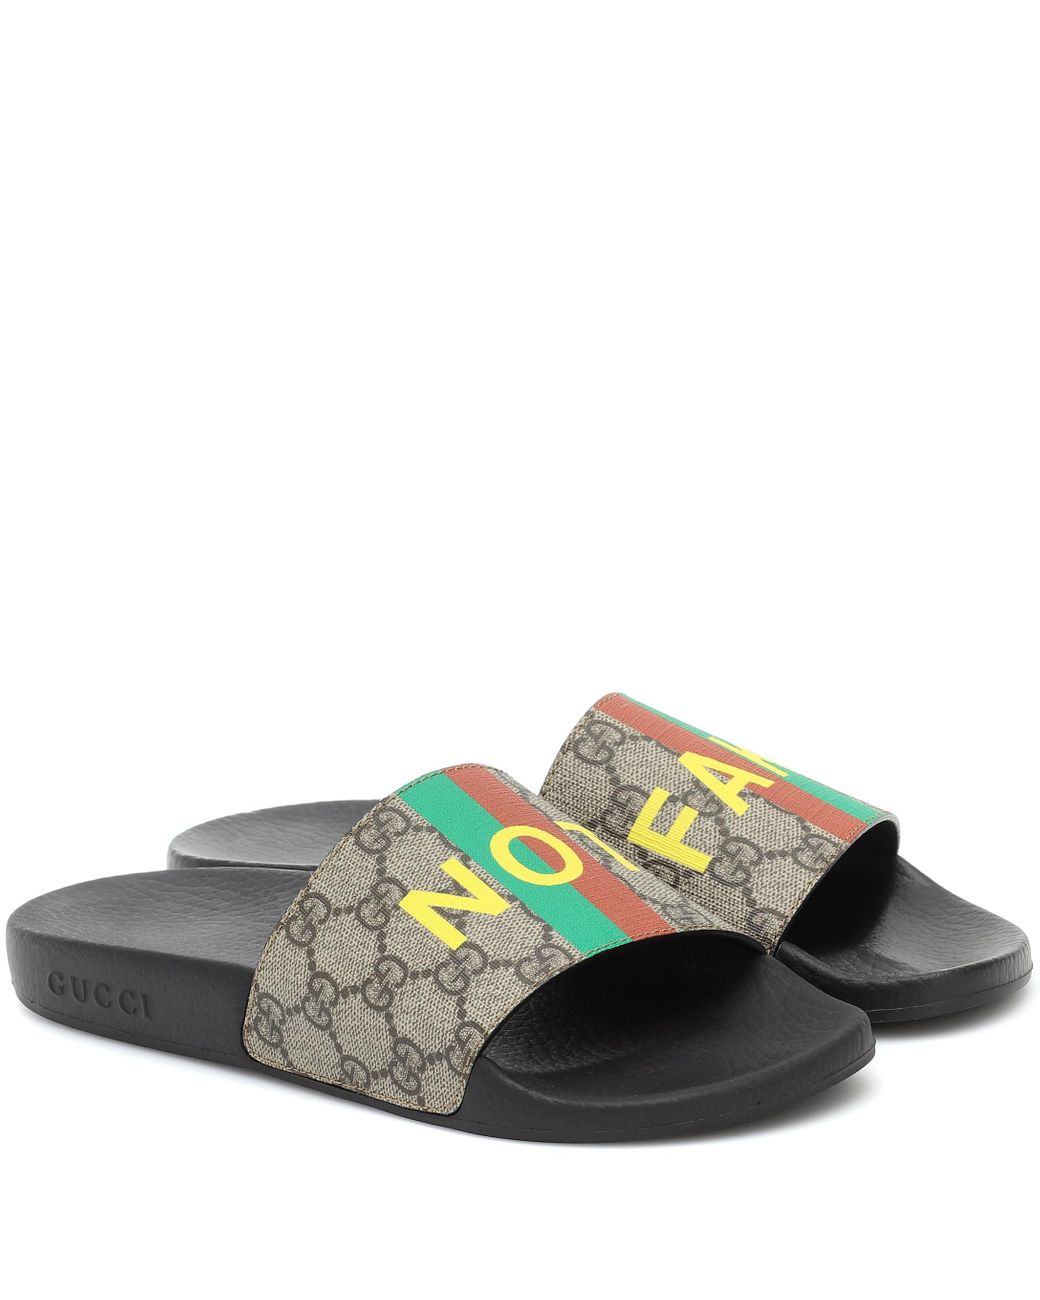 Gucci 'fake/not' Print Slide Sandal in Beige (Natural) - Save 2% - Lyst